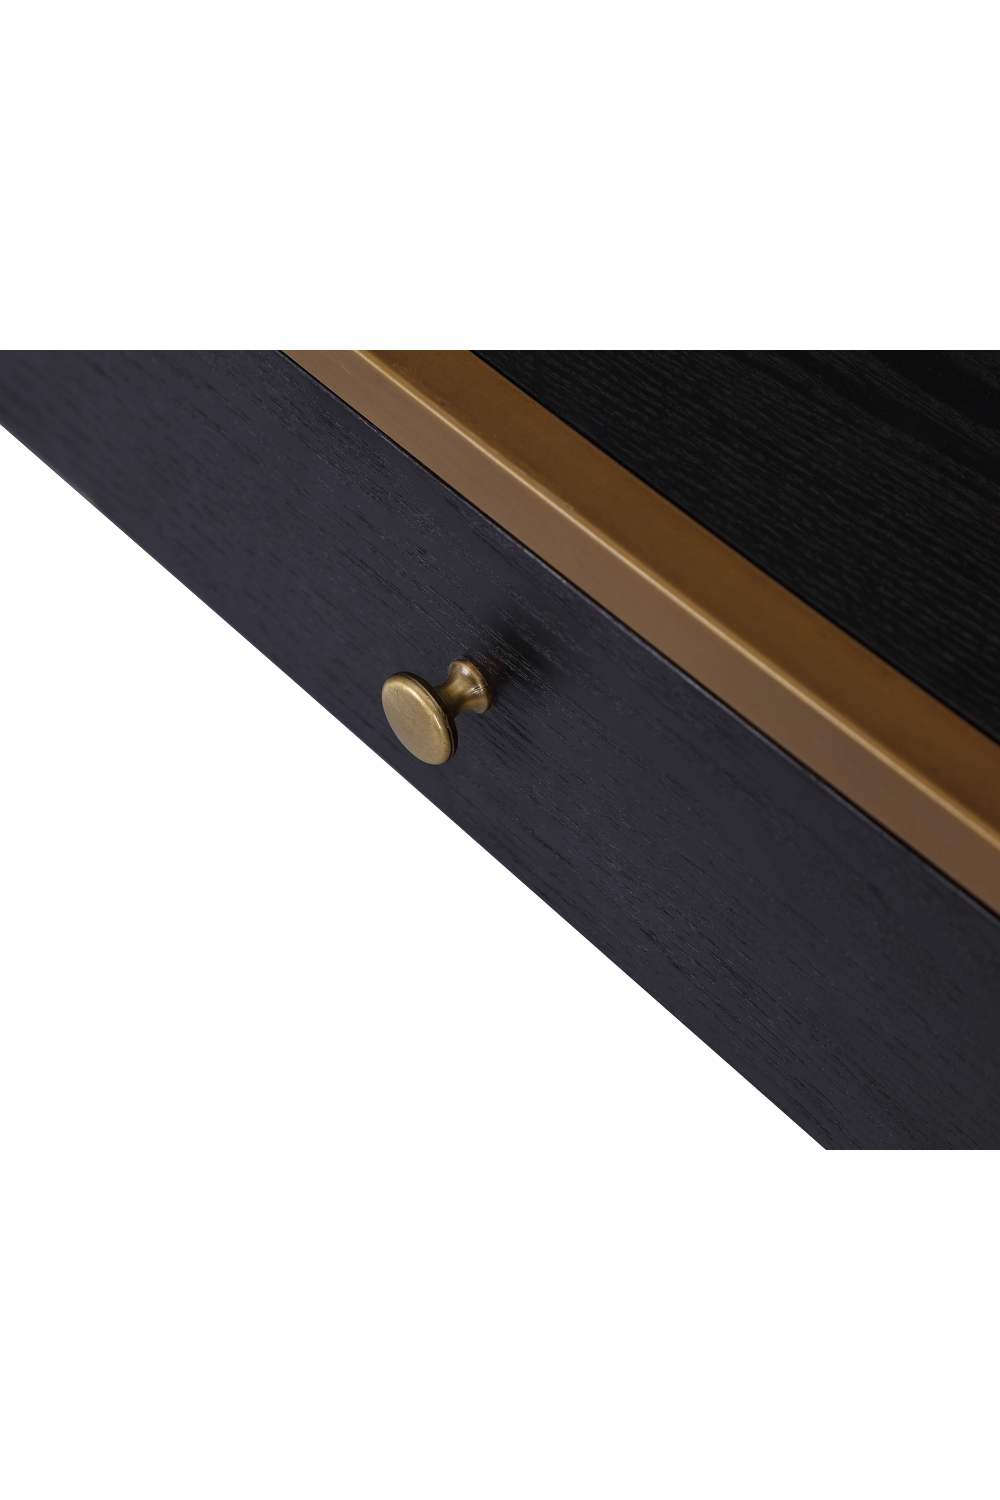 Brass Black Ash Dressing Table | Liang & Eimil Rivoli | #1 Eichholtz Retailer